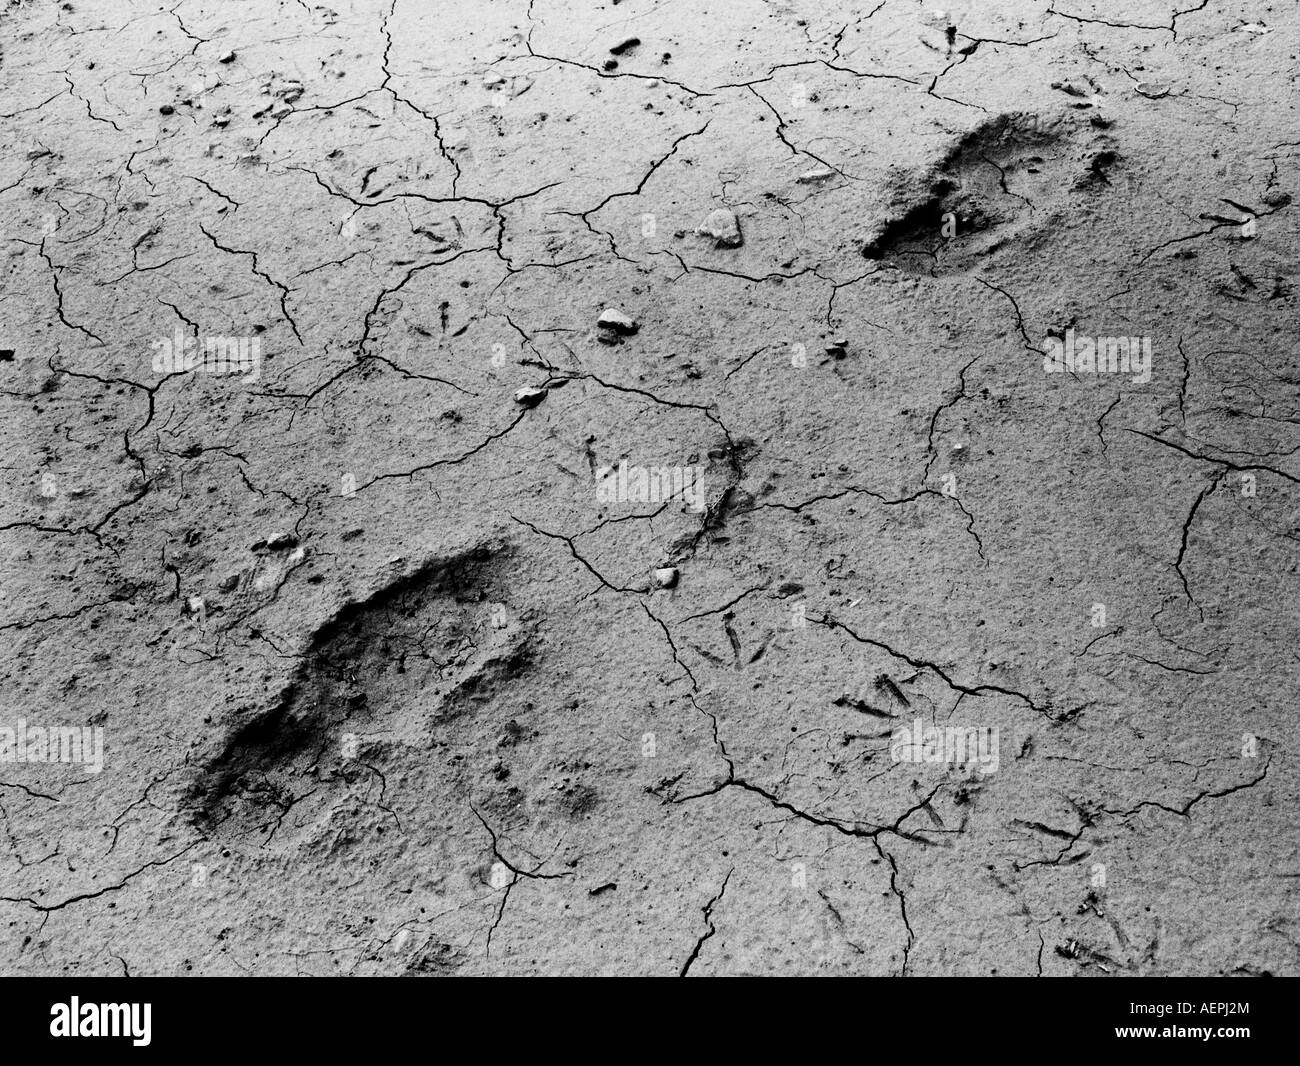 Footprints across cracked mud. Stock Photo